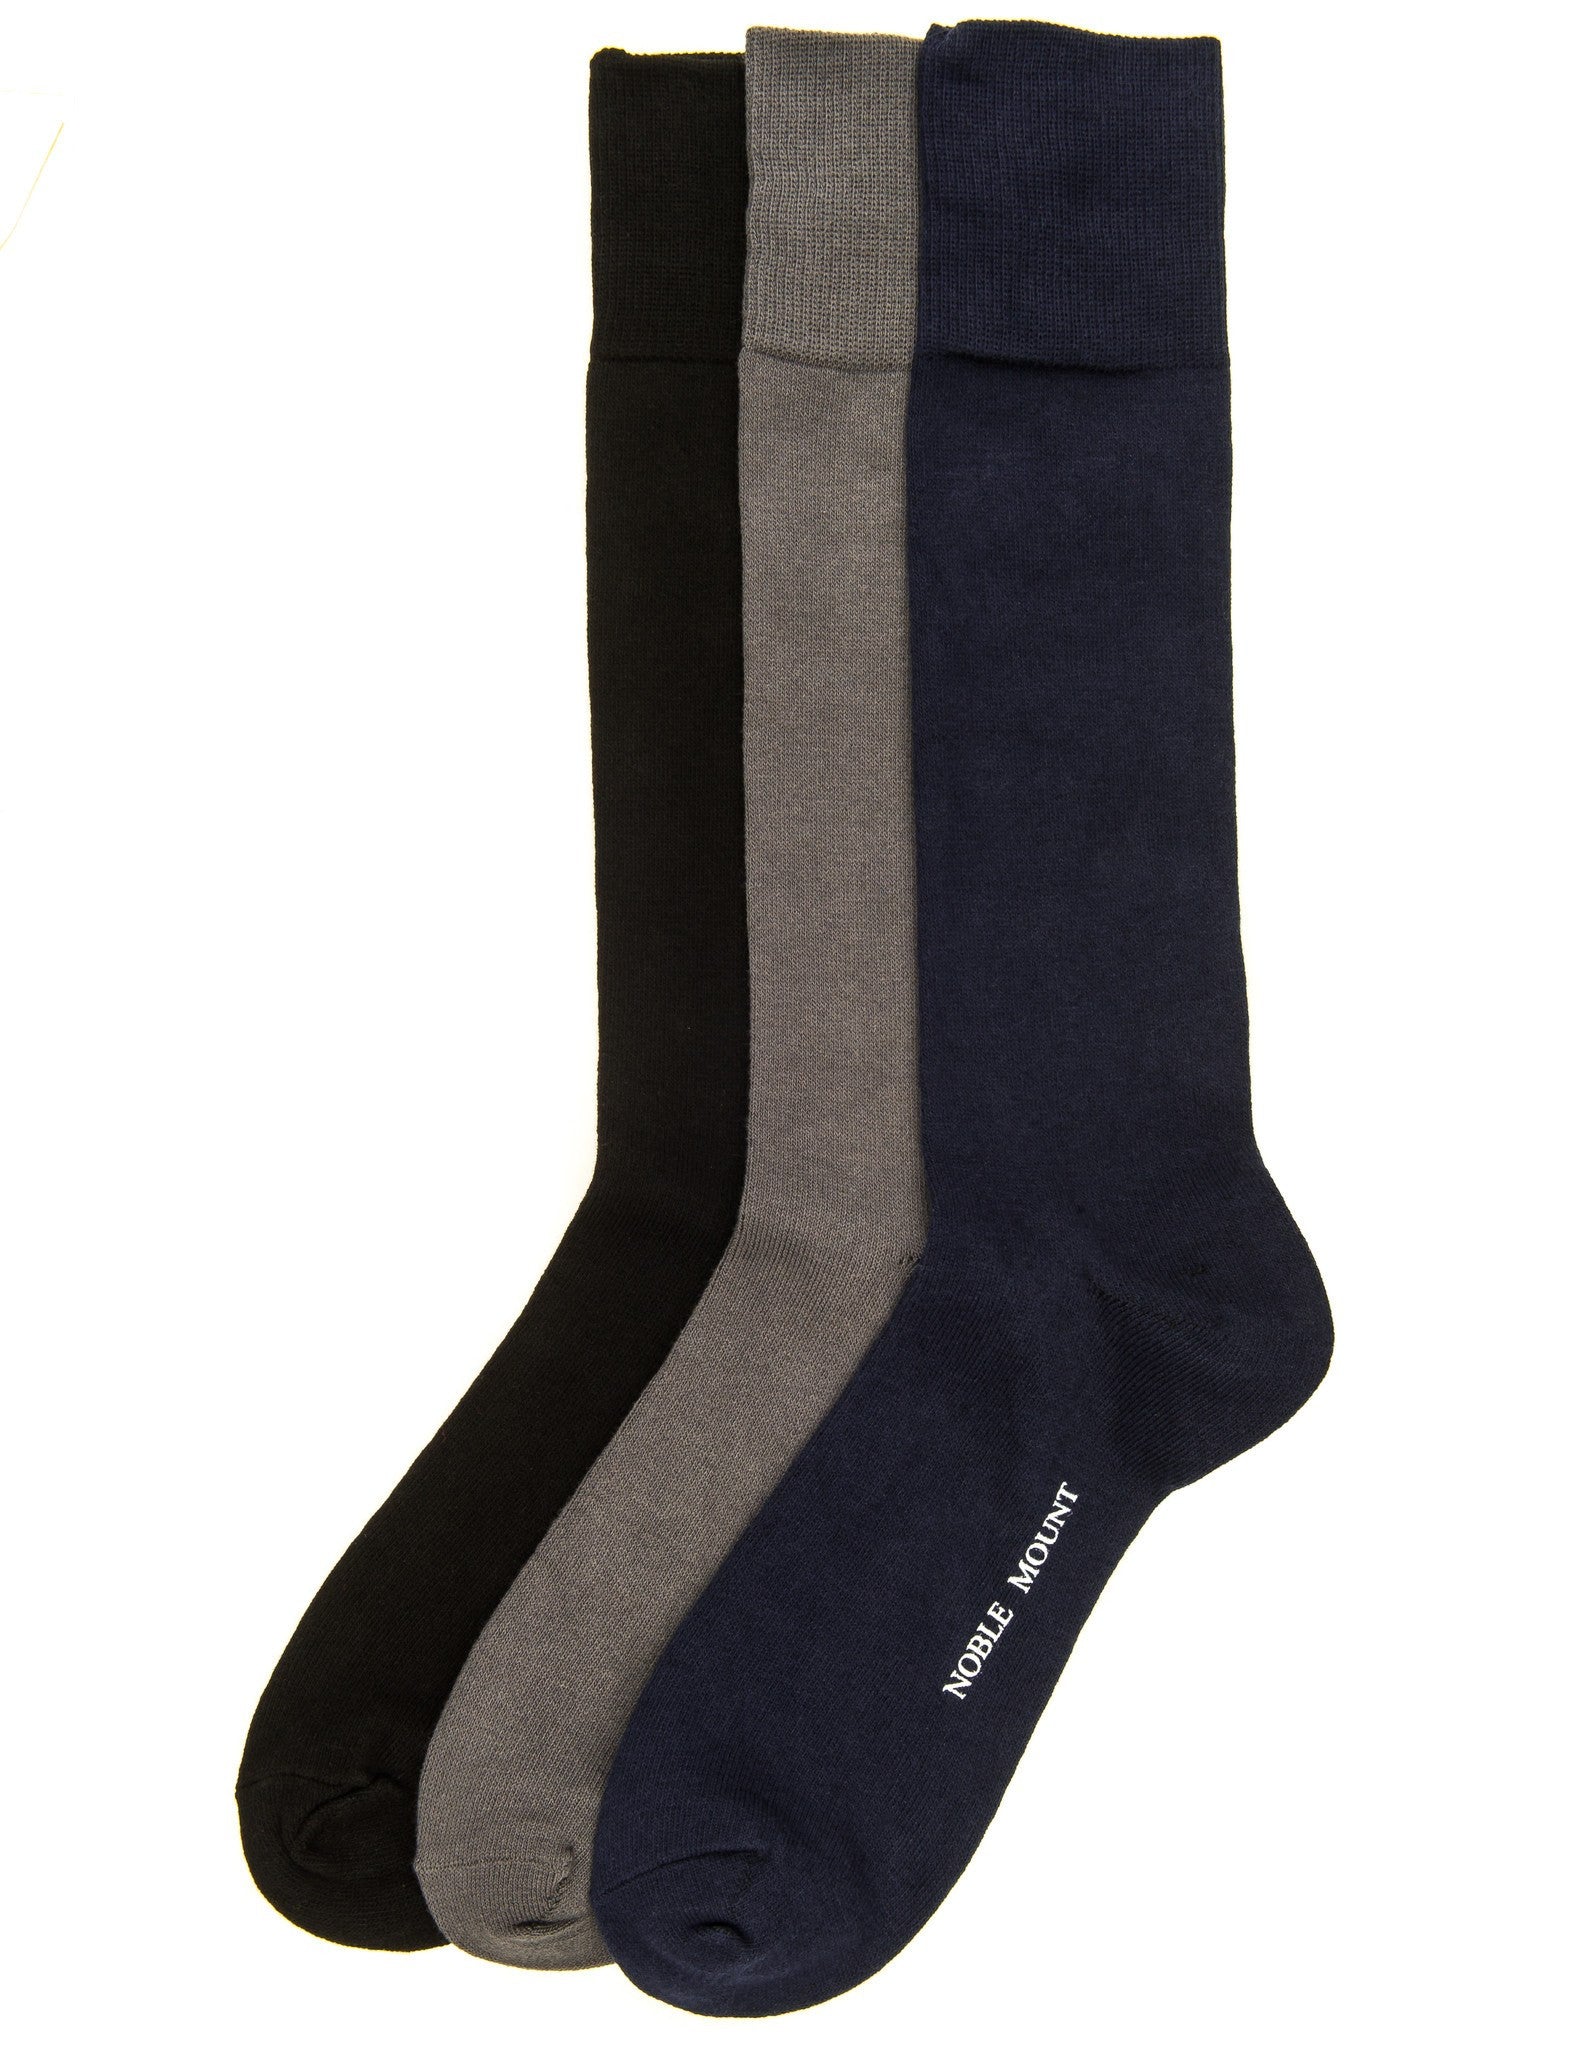 Noble Mount Men's Combed Cotton Dress Socks 3-Pack